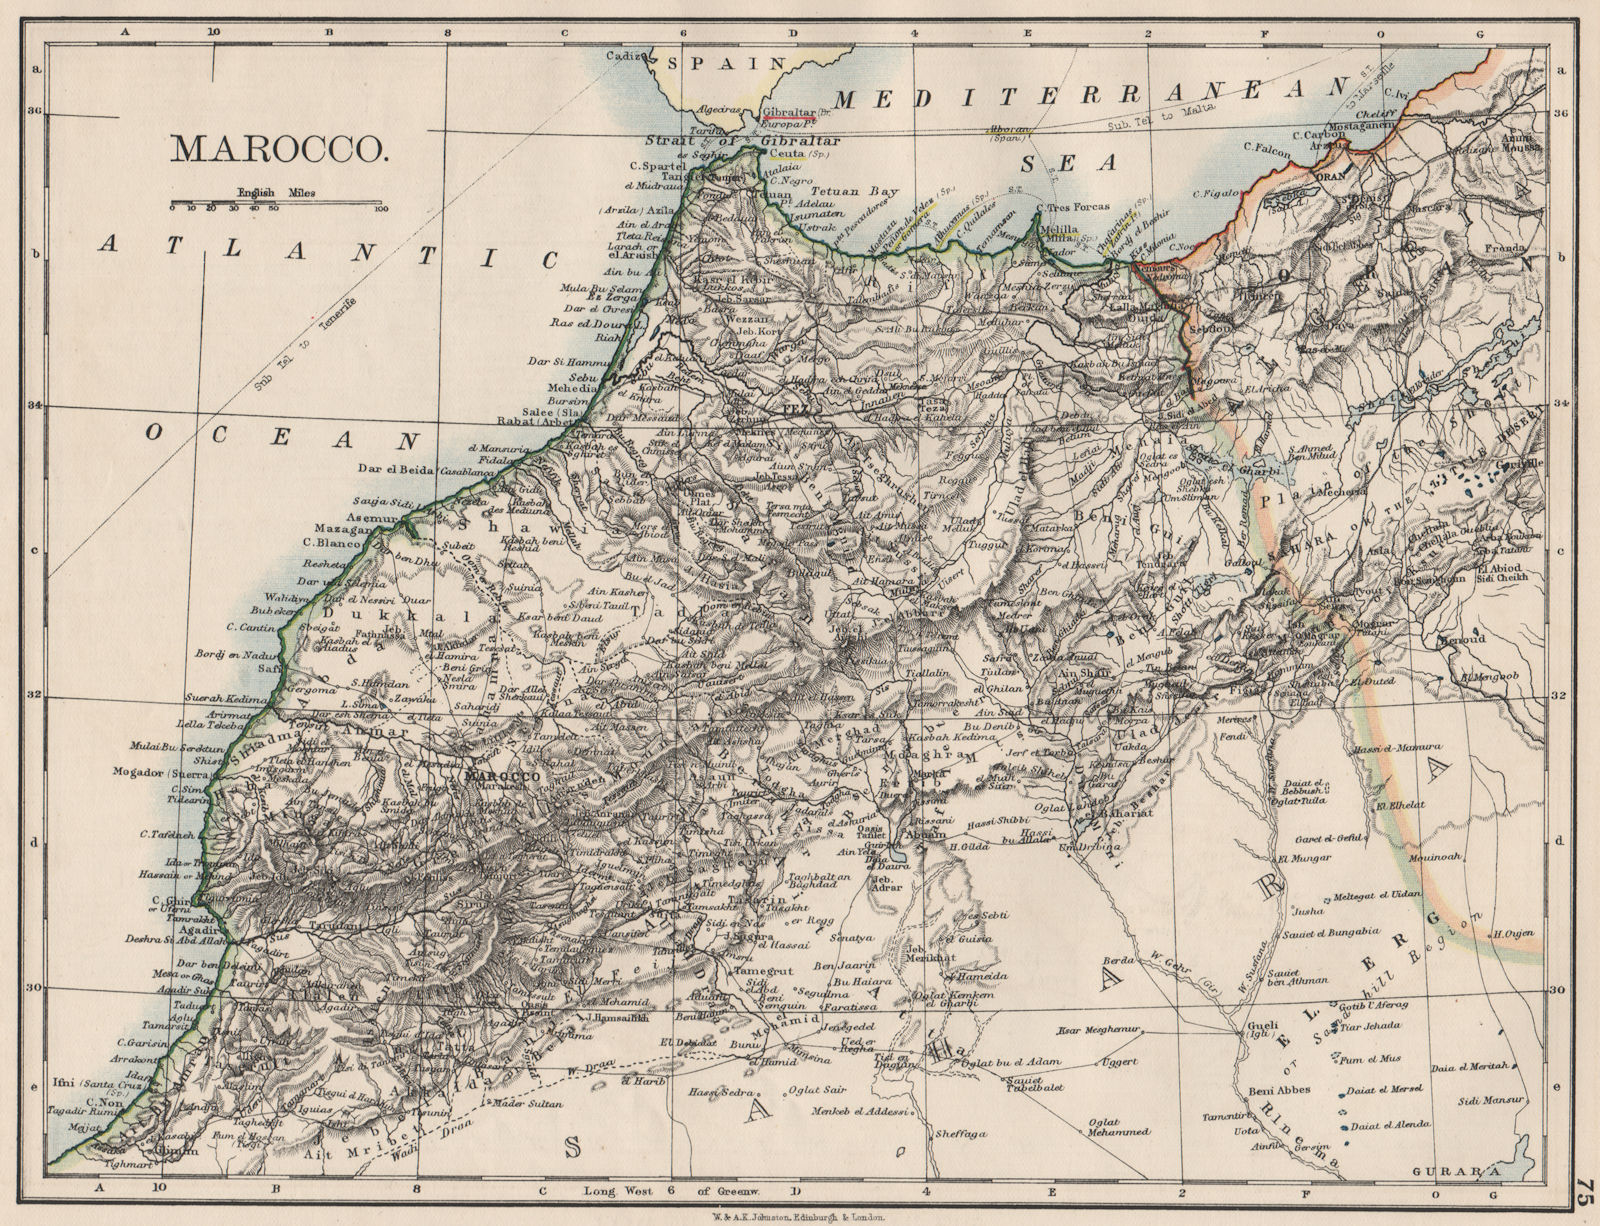 MOROCCO. Showing Atlas mountains rivers towns. Marrakech. JOHNSTON 1900 map